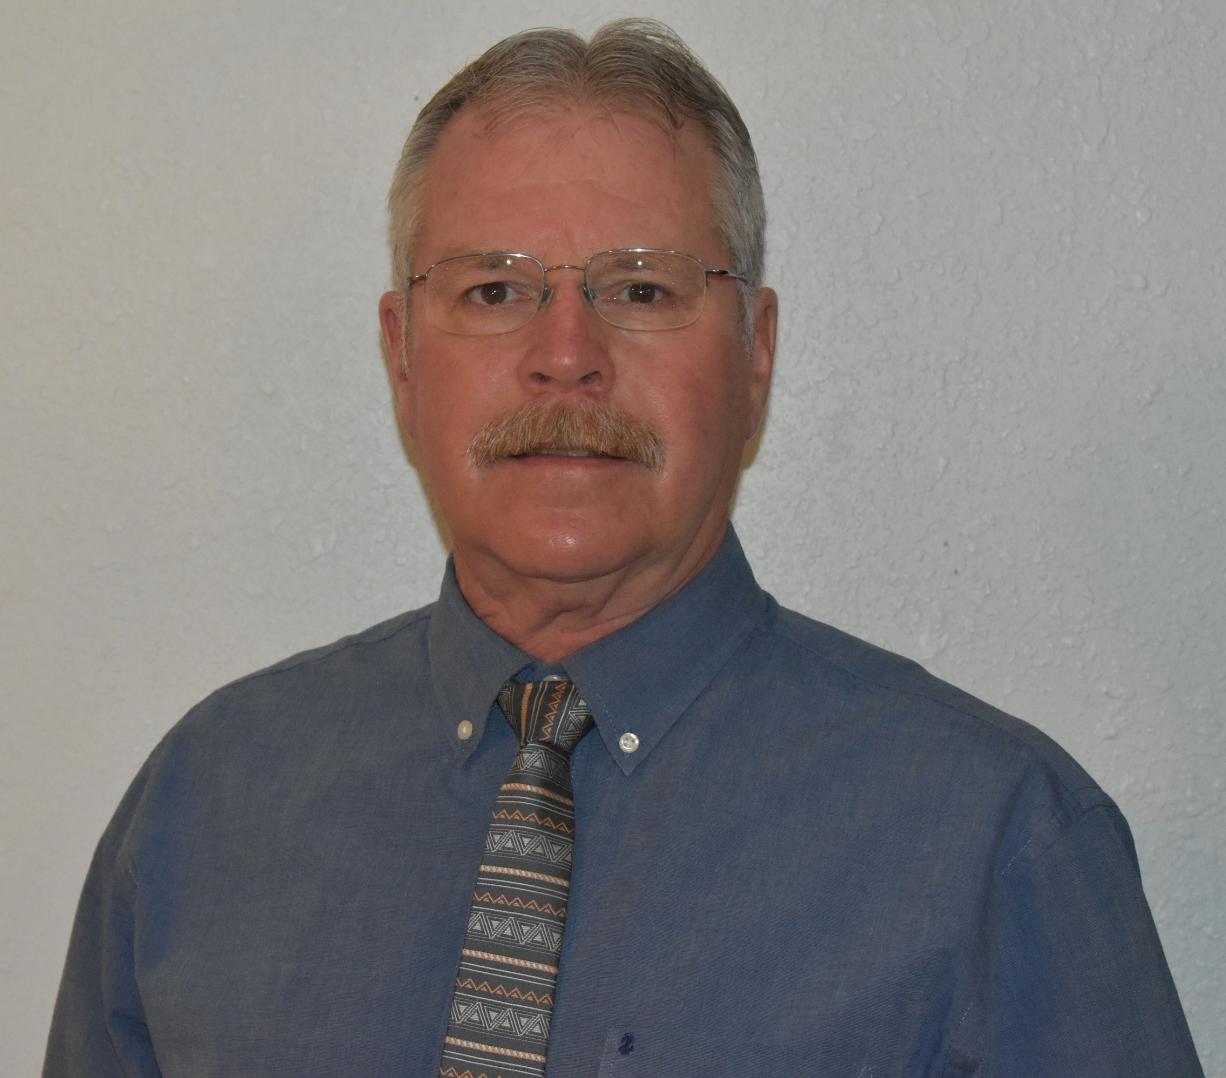 Bondsman Kent Stephens works for the most Trusted Bonding Company in Logan, Utah